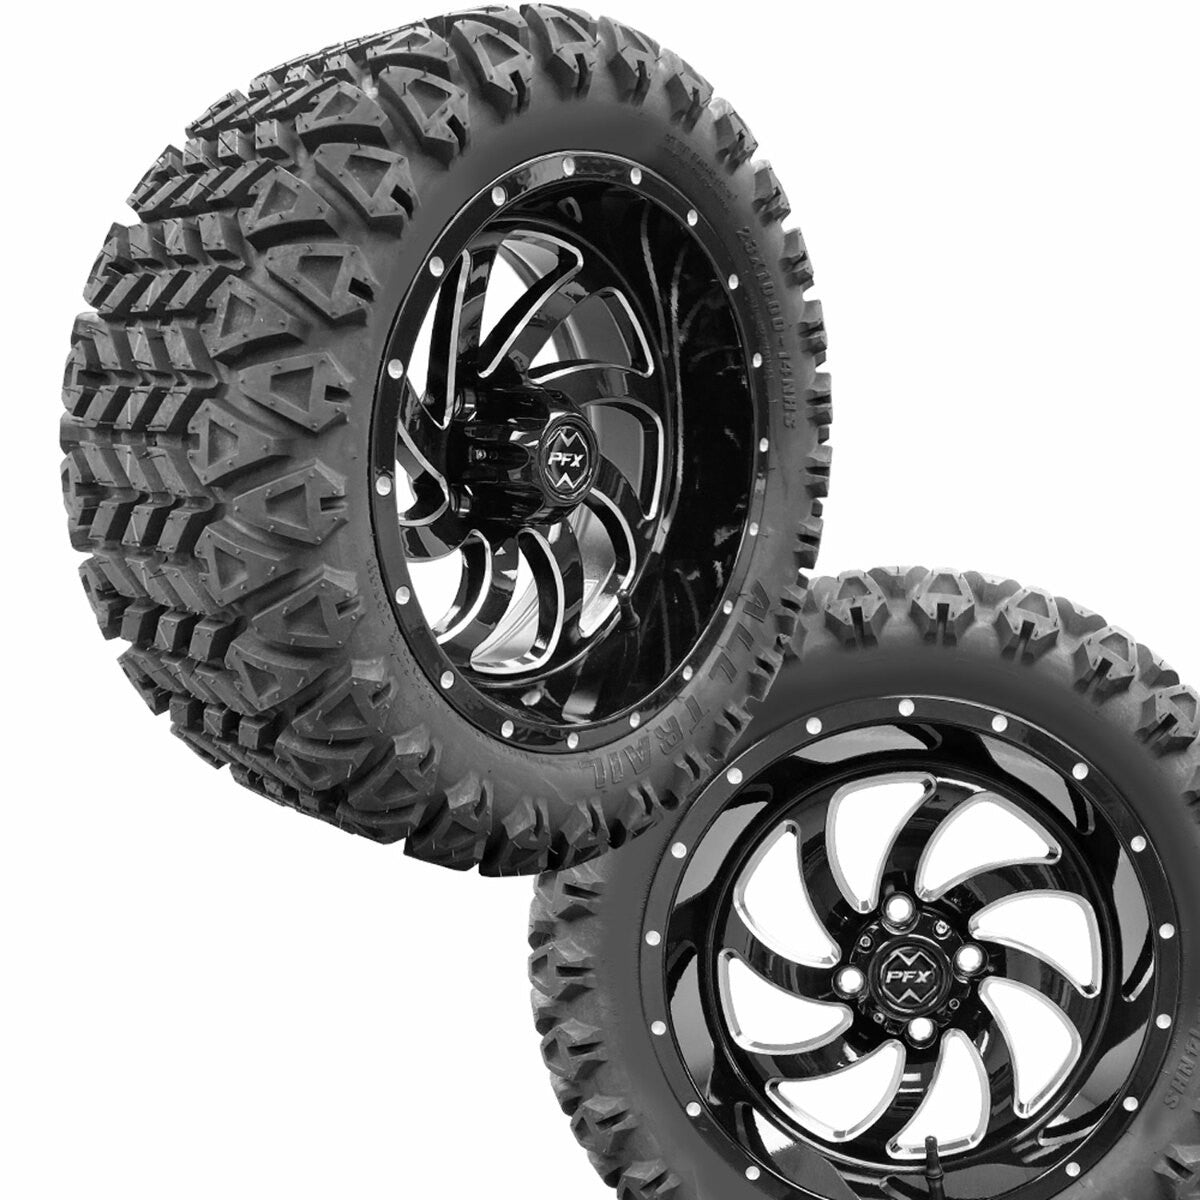 14" PHANTOM Gloss/Black Wheels on 23x10x14 All Trail AT Tires (Set of 4)